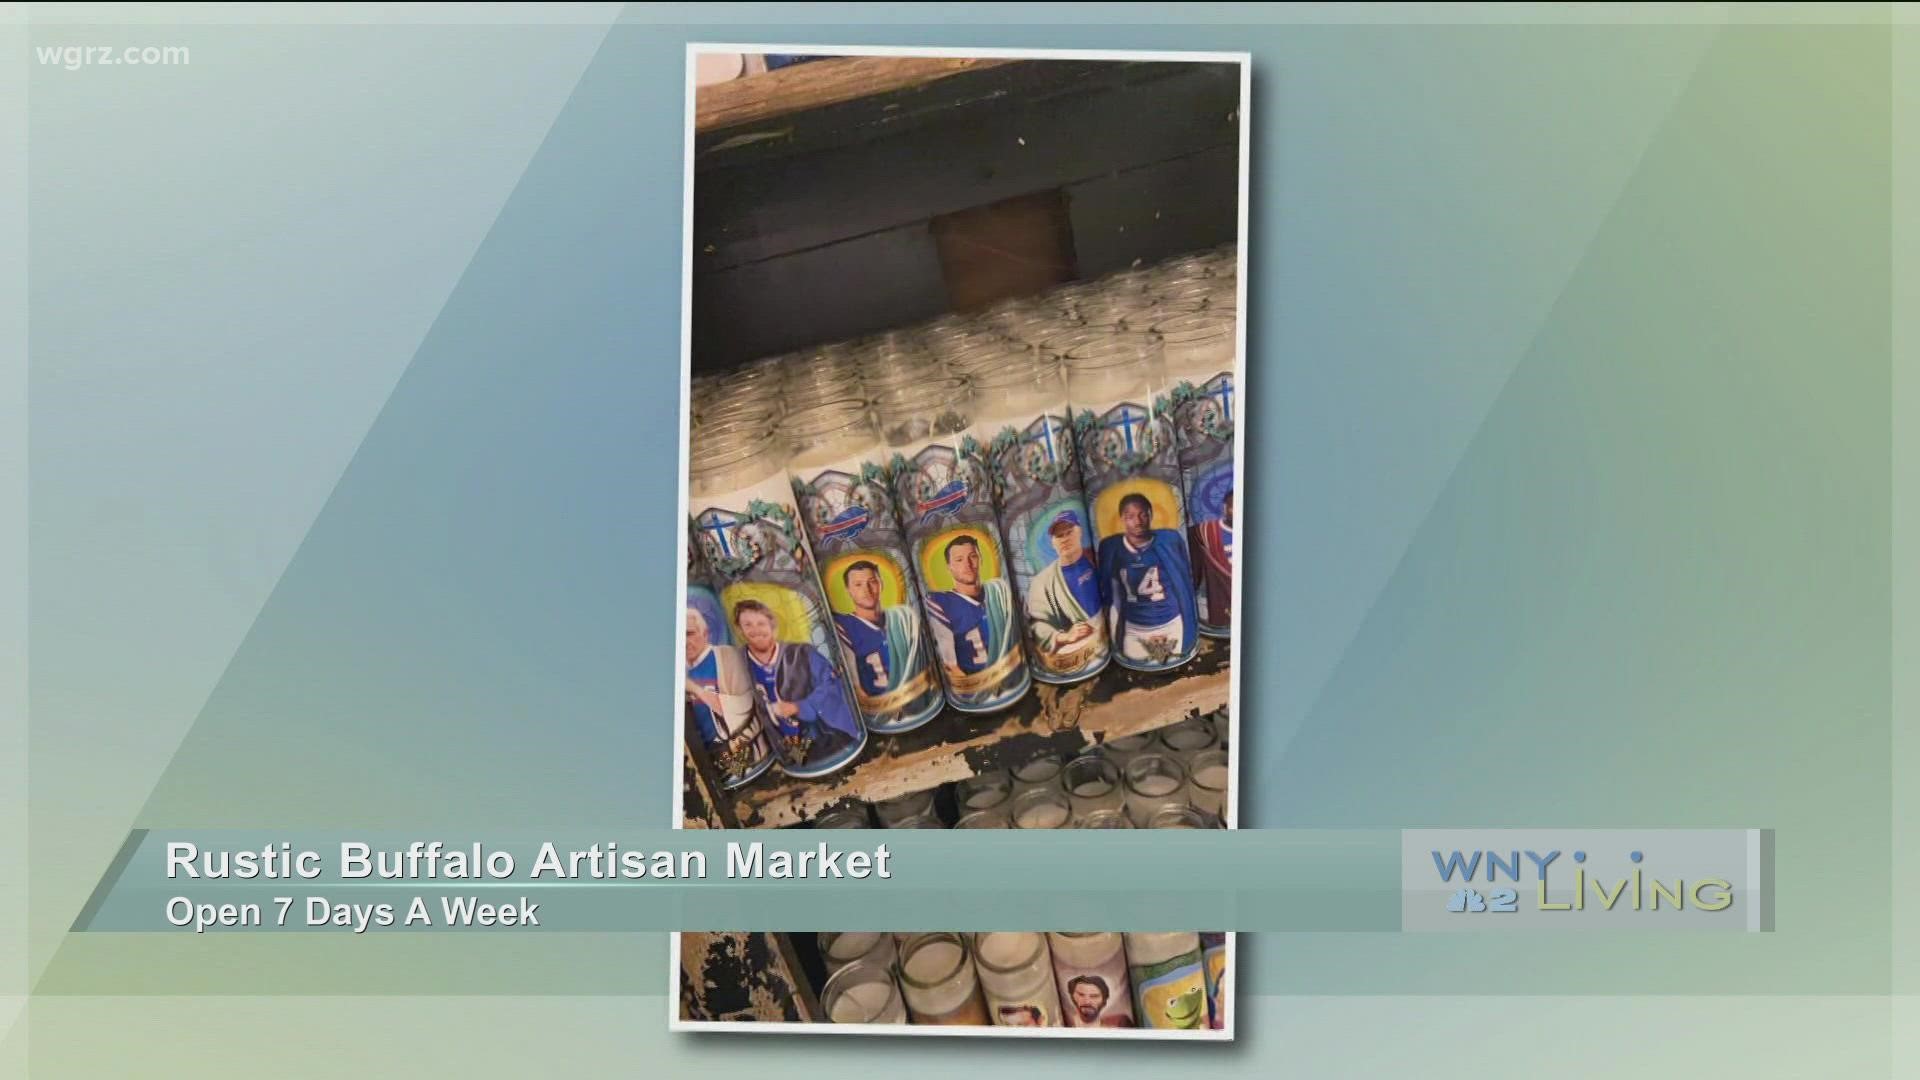 WNY Living - October 9 - Rustic Buffalo Artisan Market (THIS VIDEO IS SPONSORED BY RUSTIC BUFFALO ARTISAN MARKET)